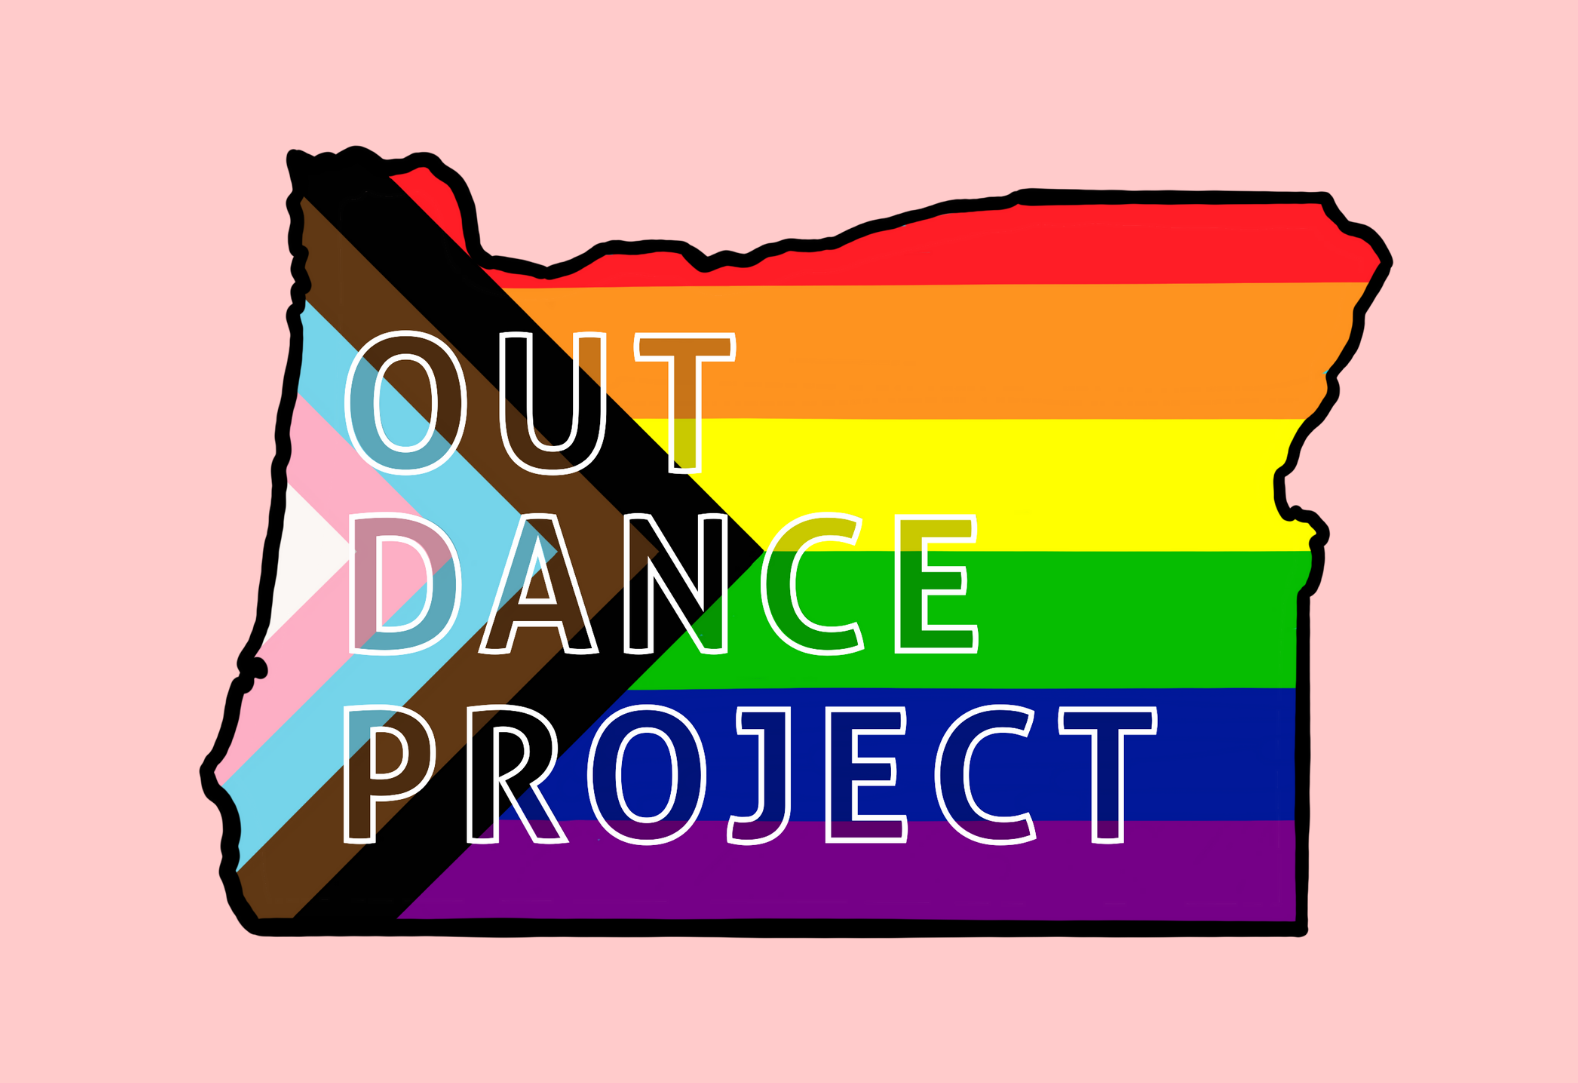 Логотип OUTDance Project в форме орегона с цветами флага гордости